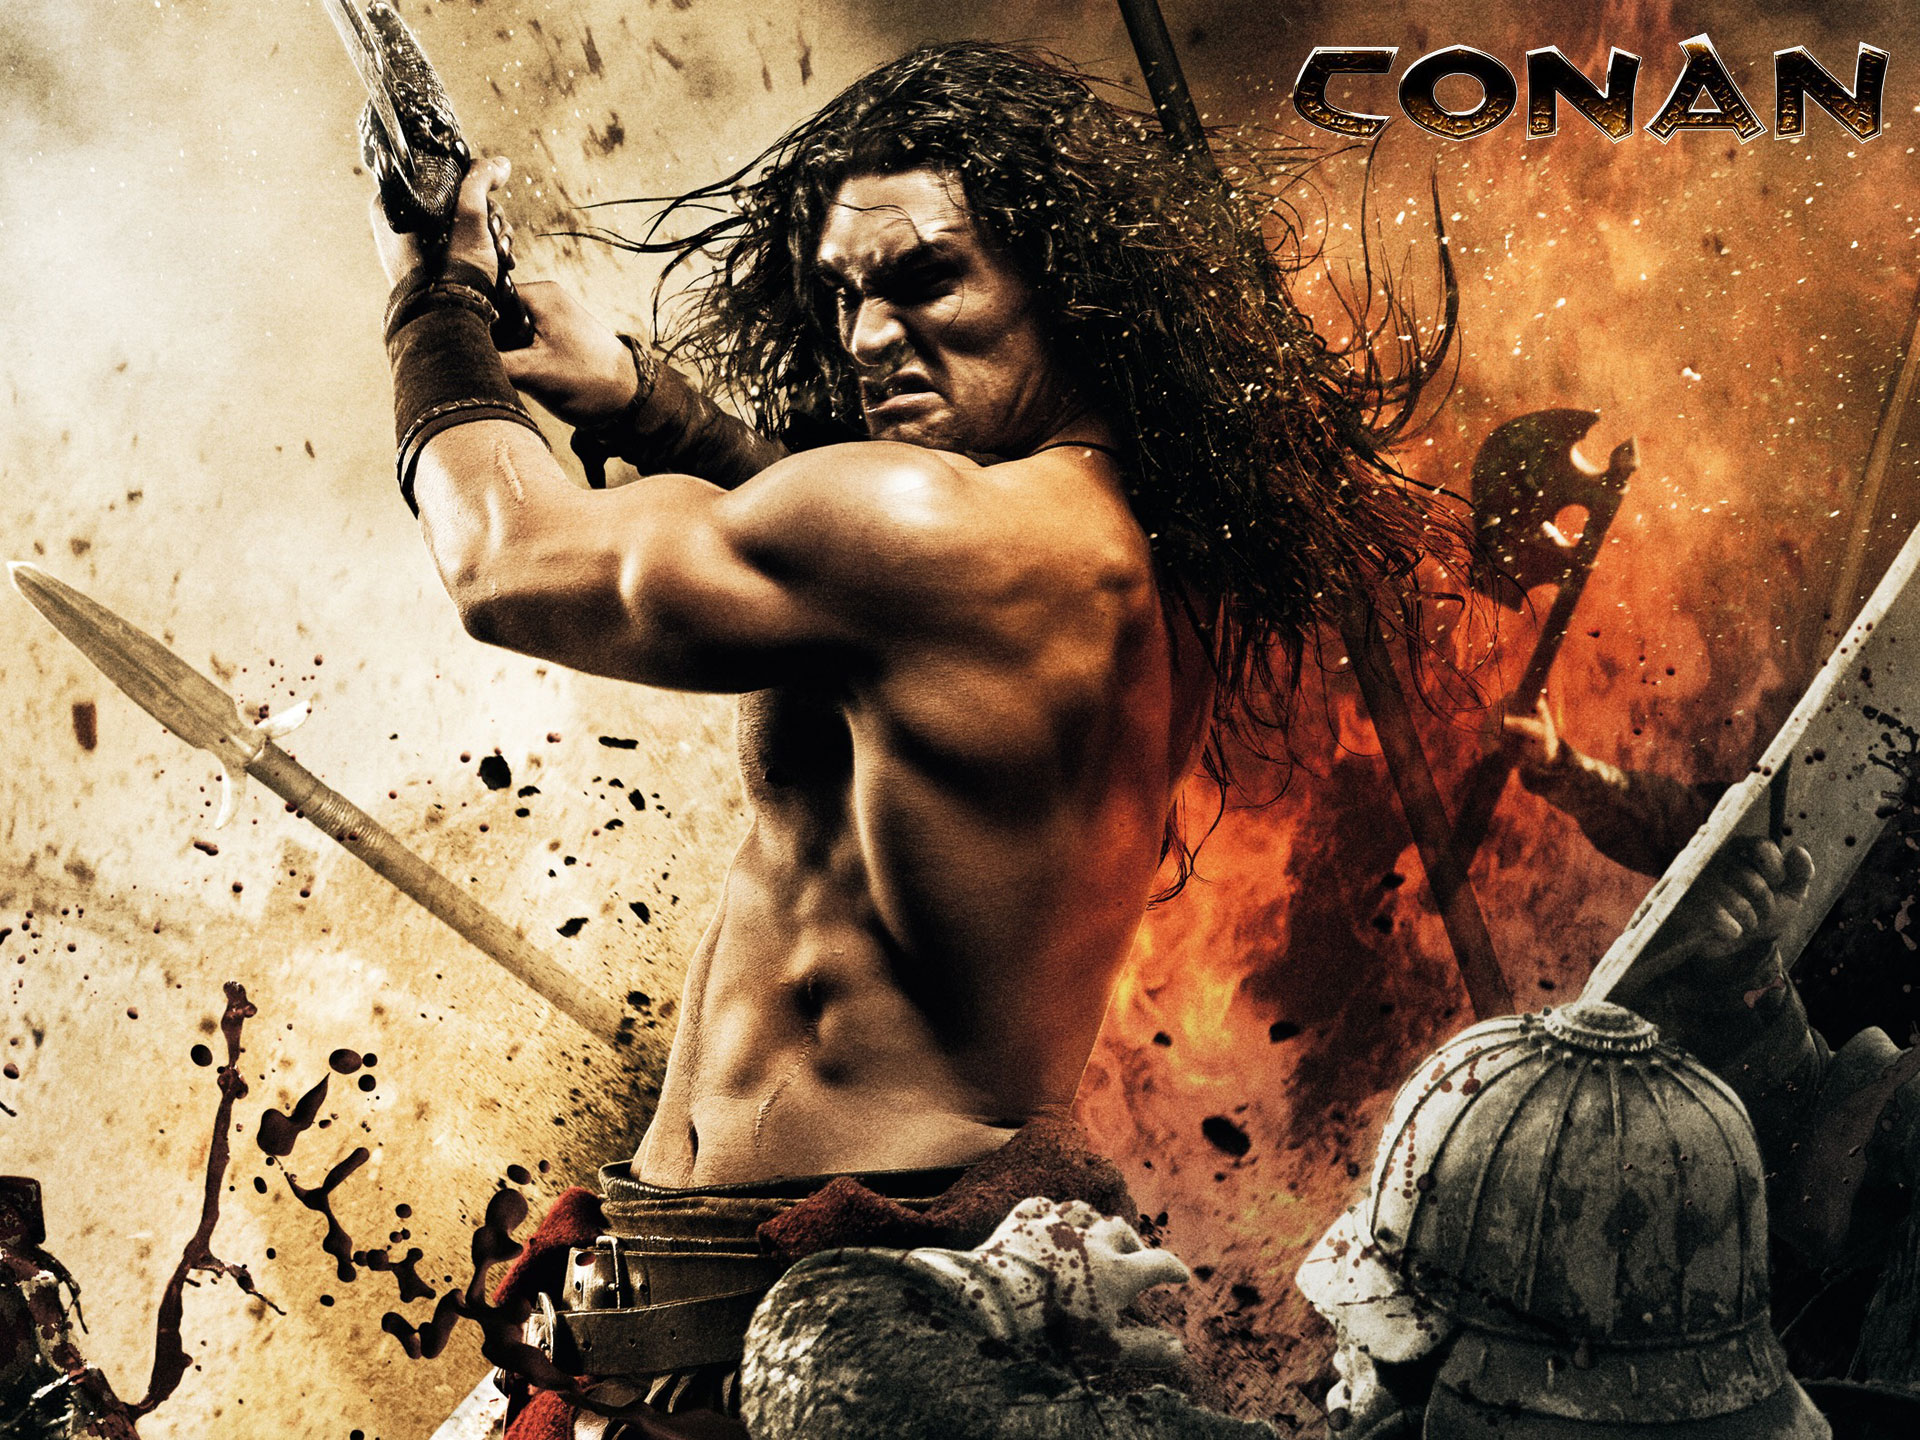 Conan the Barbarian is a 2011